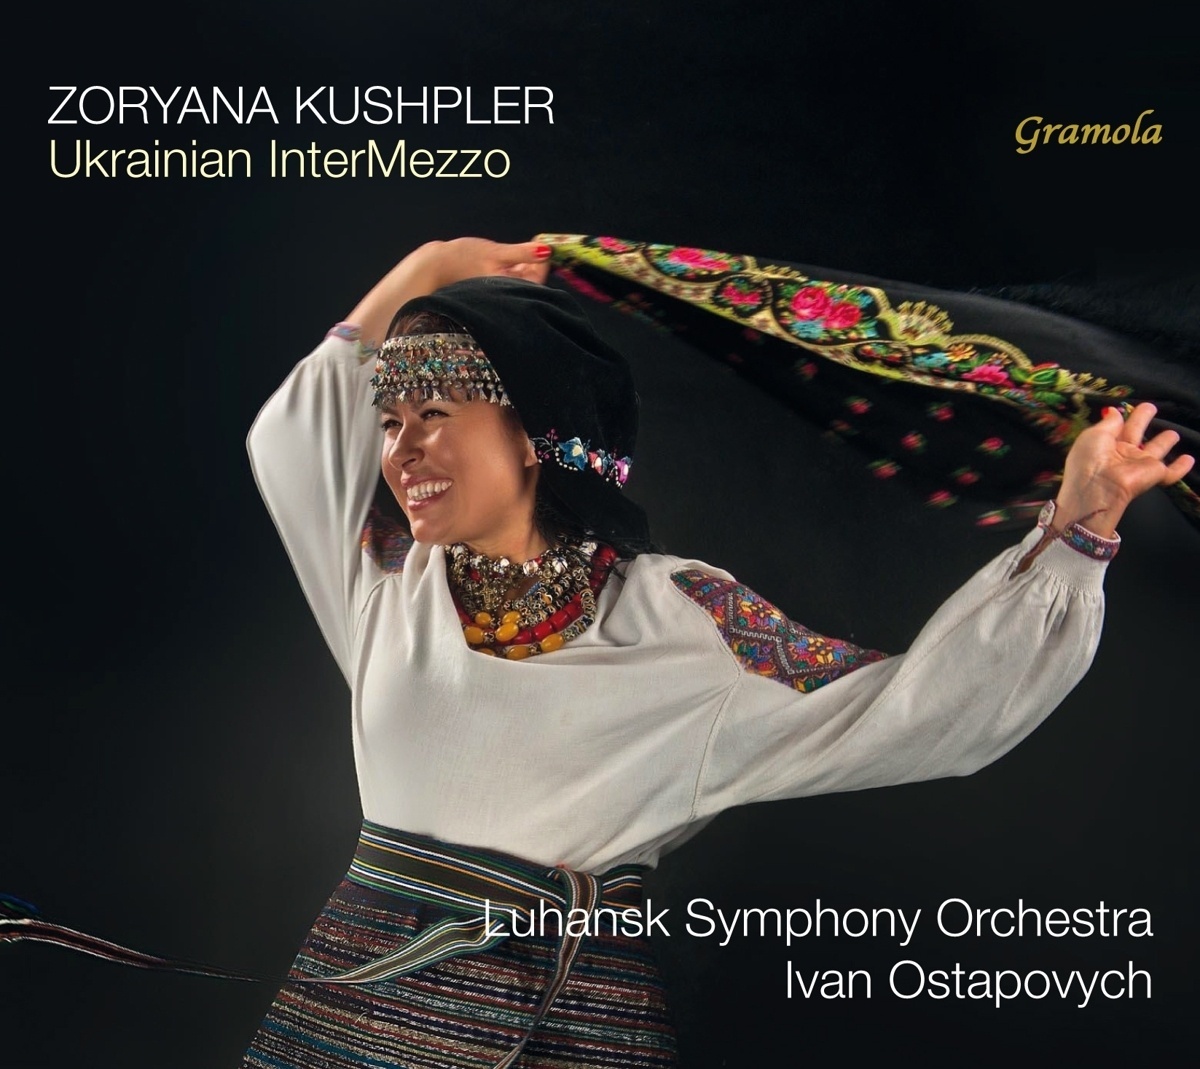 Ukrainian Intermezzo - Zoryana Kushpler  Ivan Ostapovych  Luhansk SO. (CD)